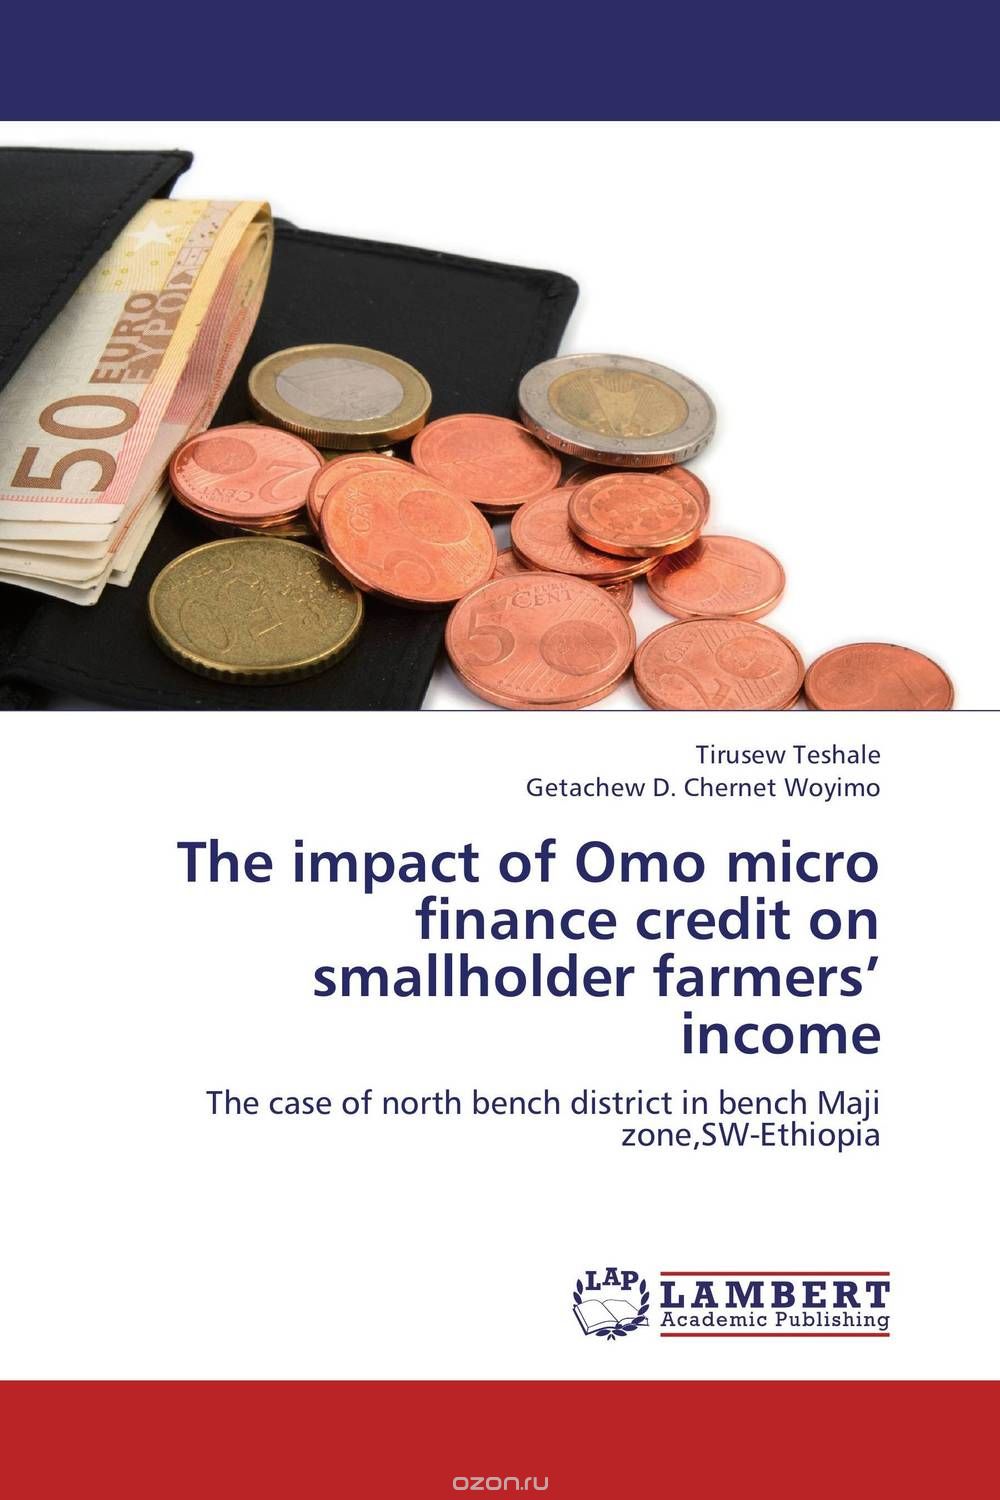 The impact of Omo micro finance credit on smallholder farmers’ income